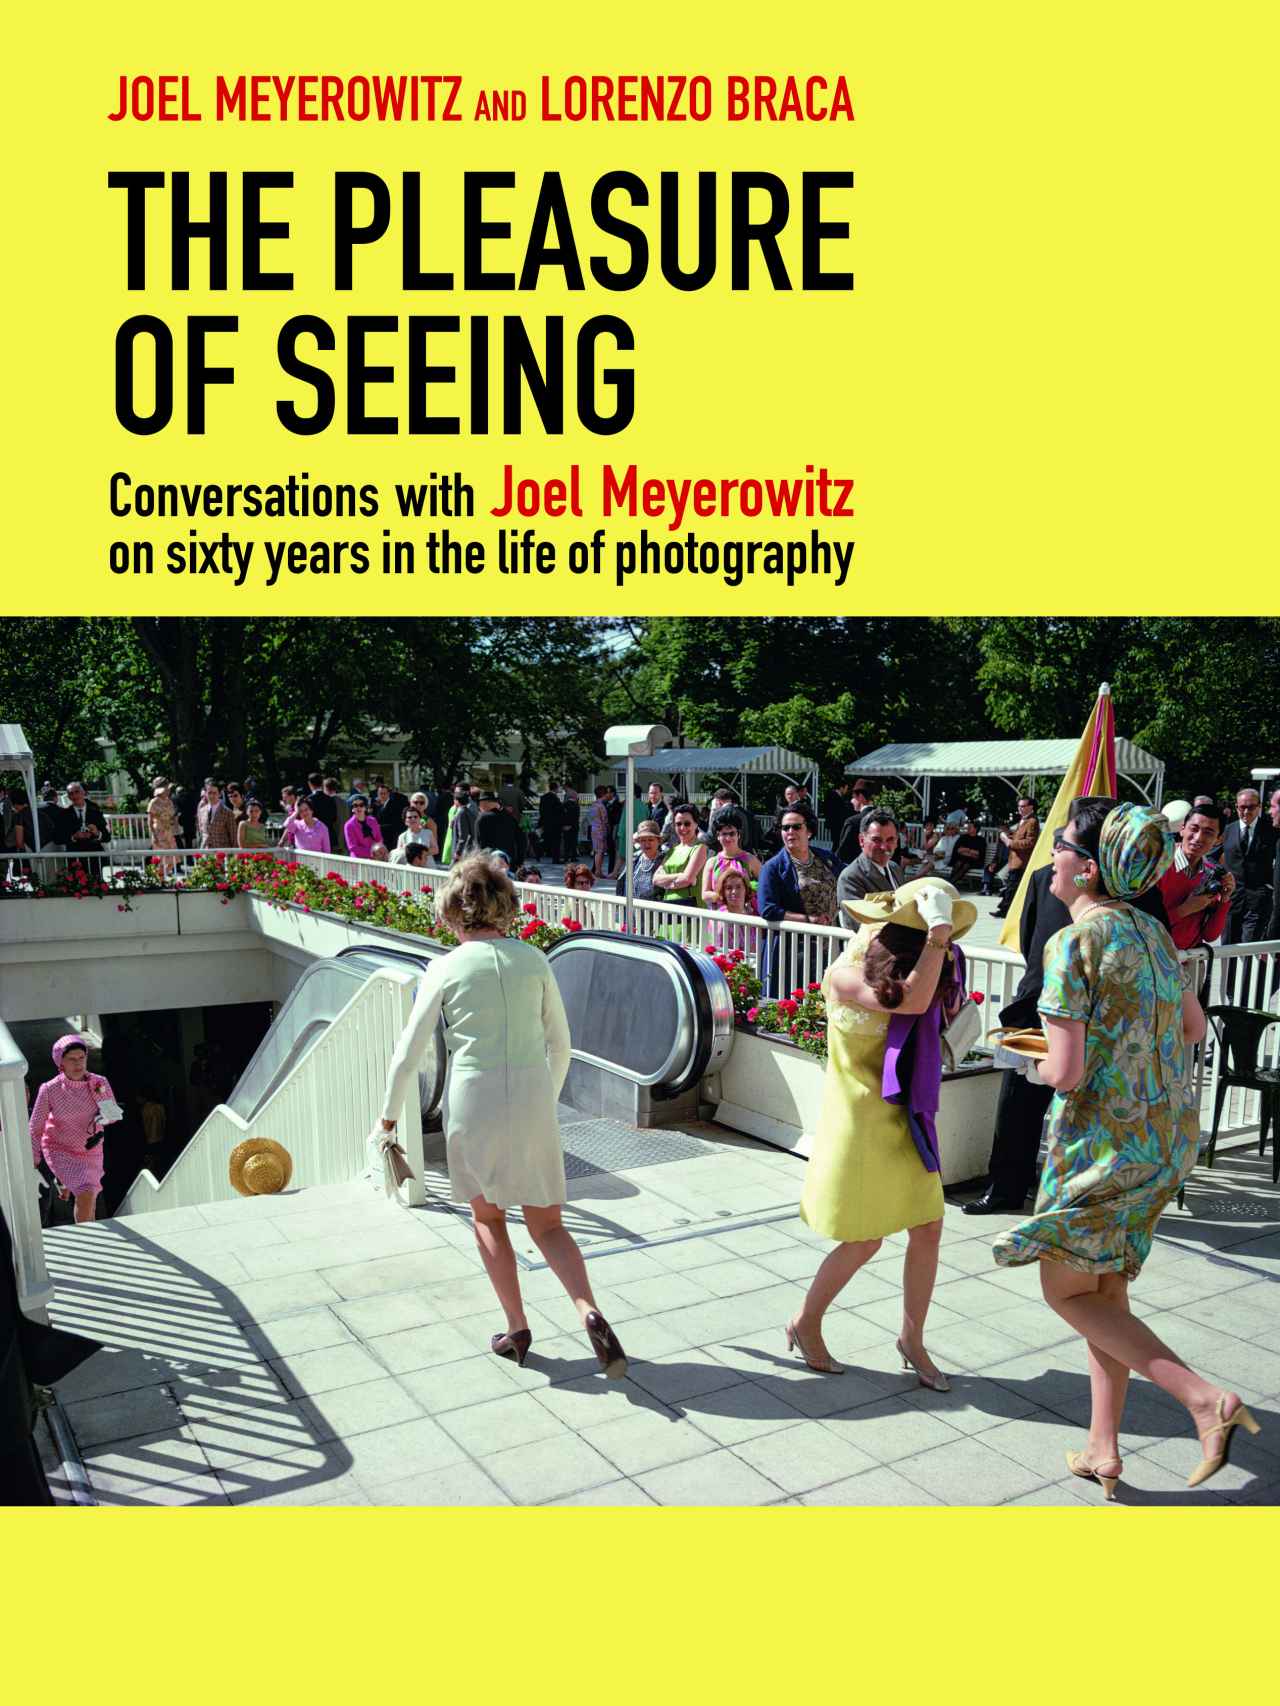 Portada de 'The Pleasure of Seeing' (Damiani), de Joel Meyerowitz y Lorenzo Braca